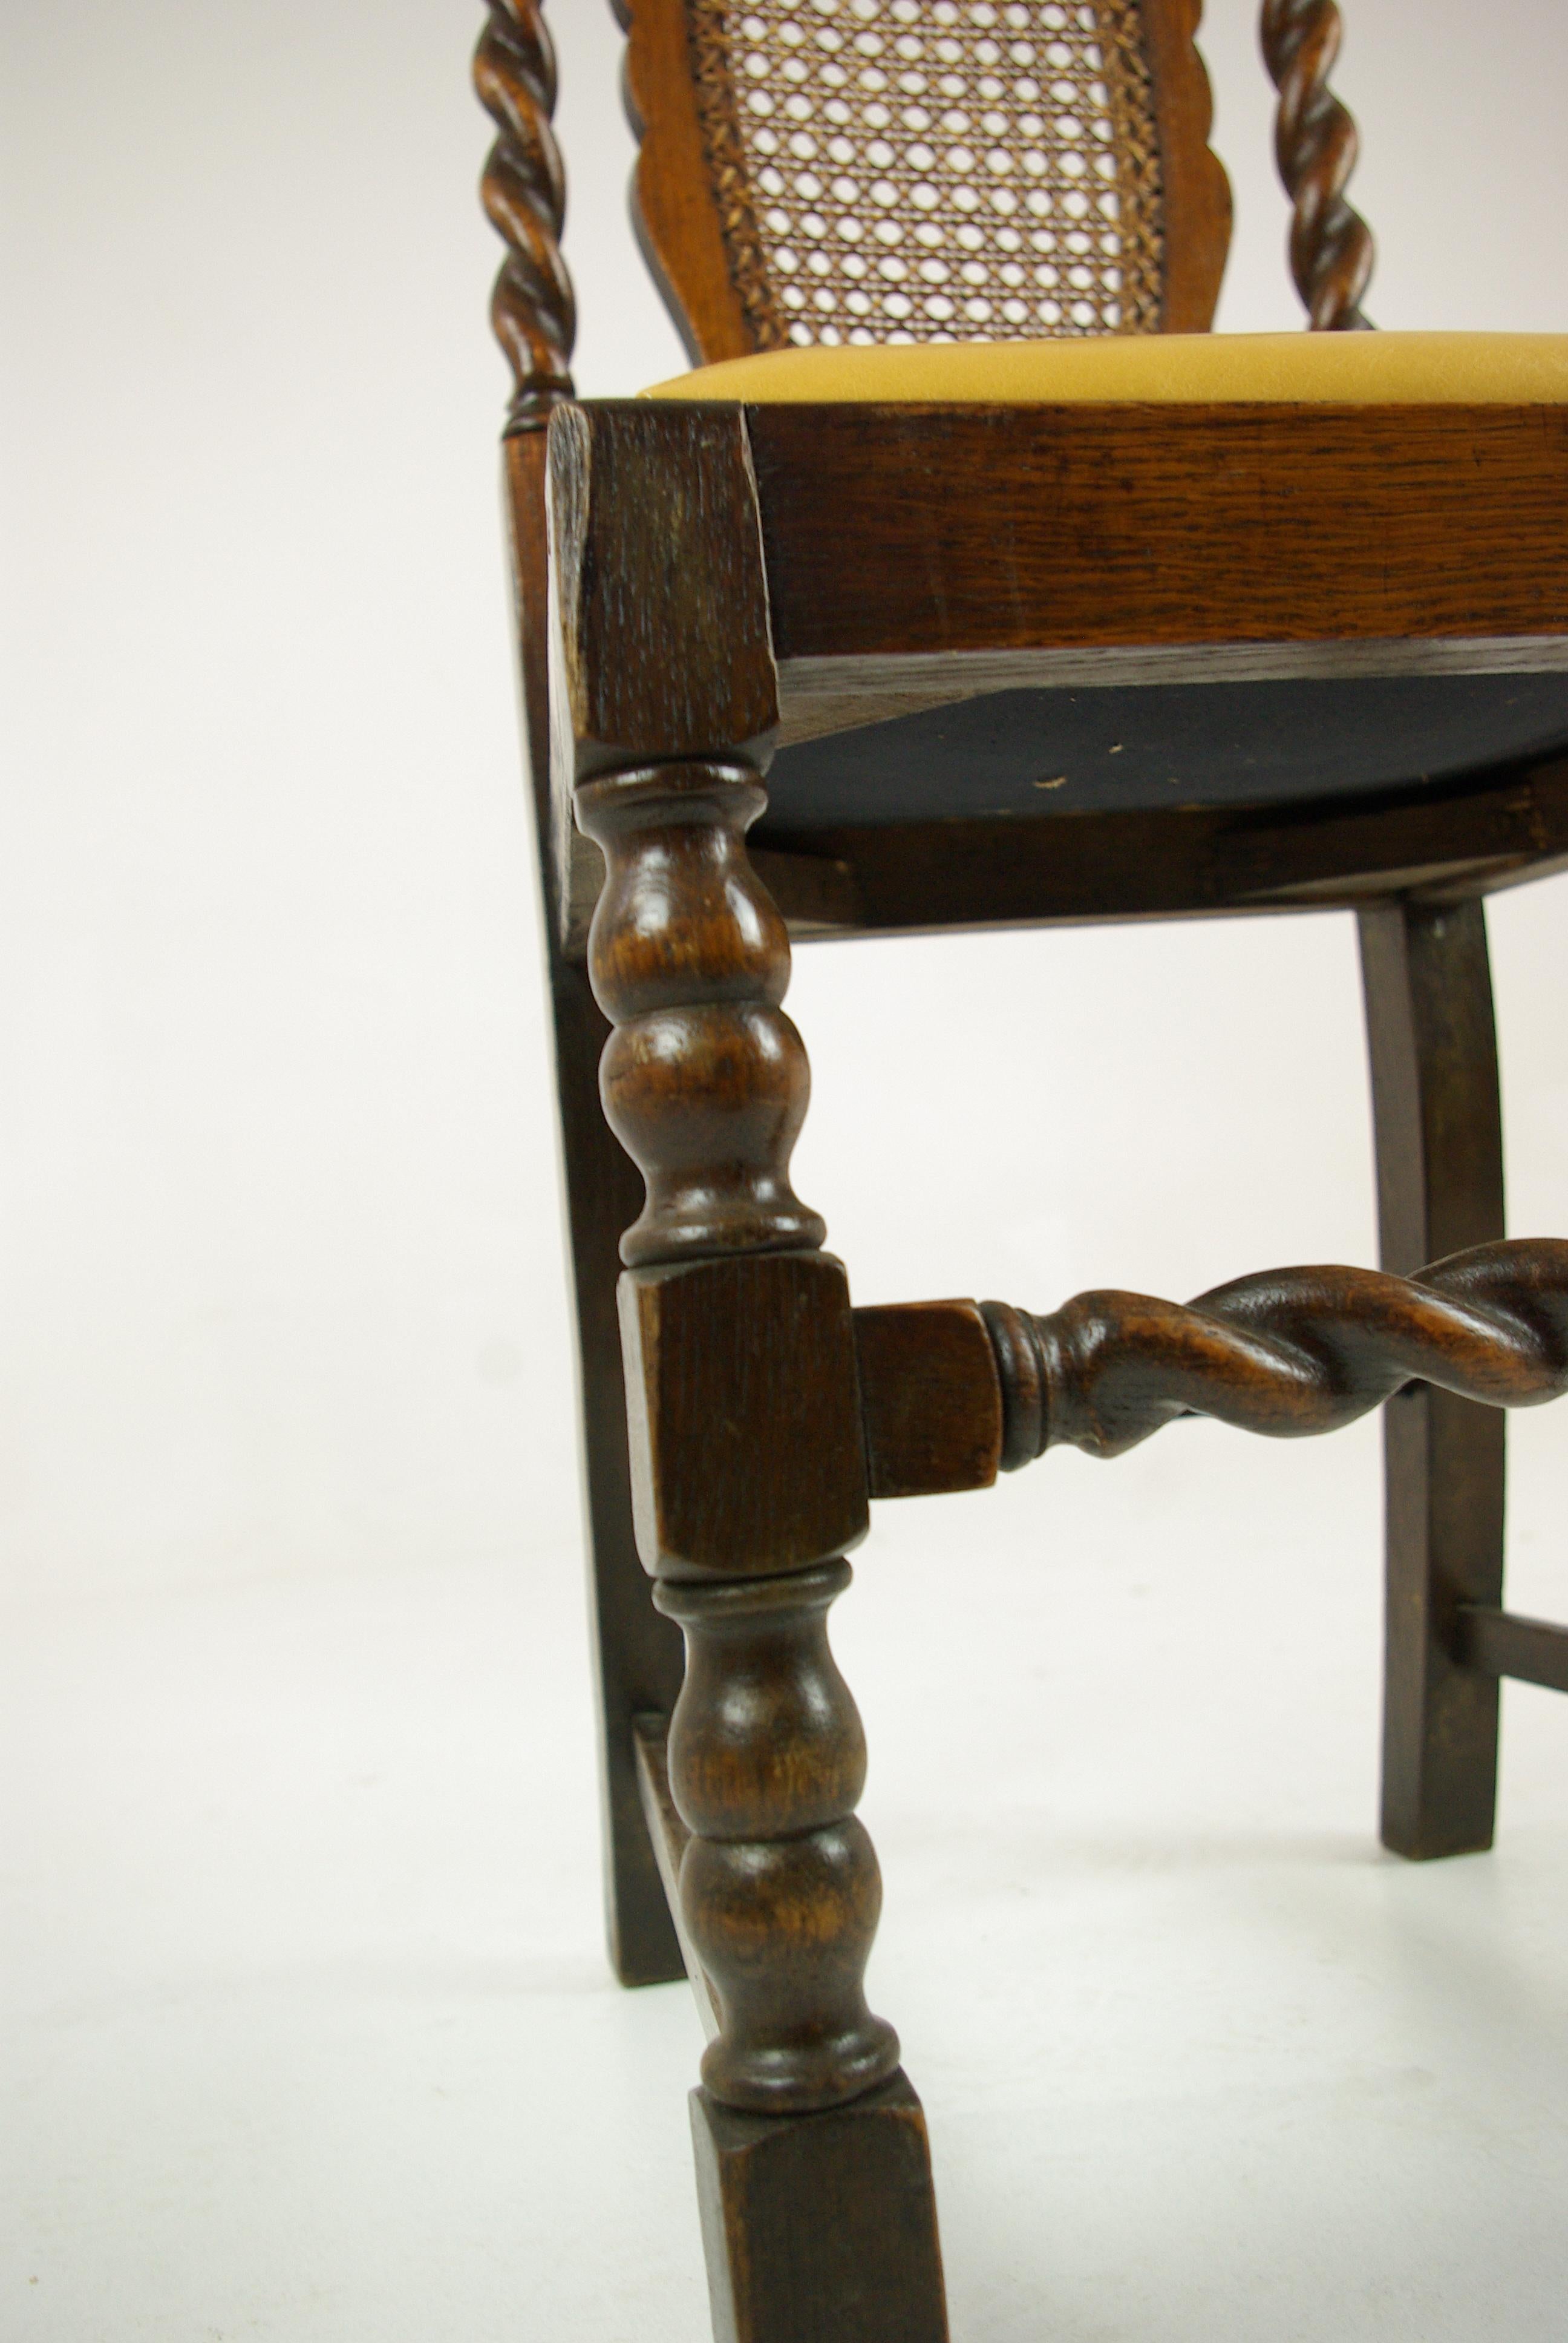 6 Oak Dining Chairs, Barley Twist Chairs, Scotland 1920, Antique Furniture B1375 4